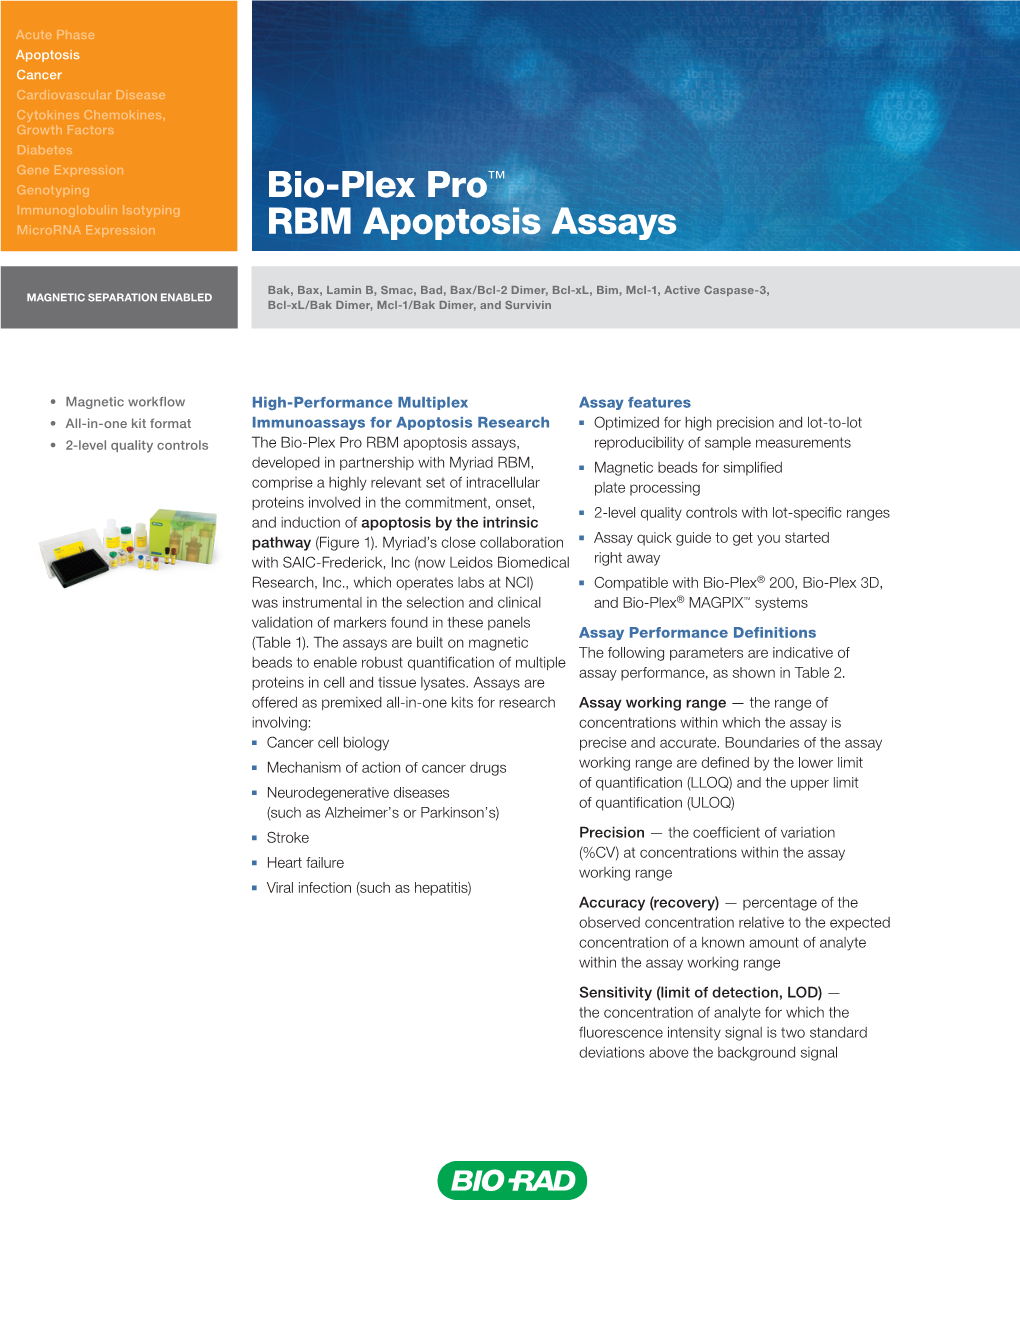 Bio-Plex Pro™ RBM Apoptosis Assays